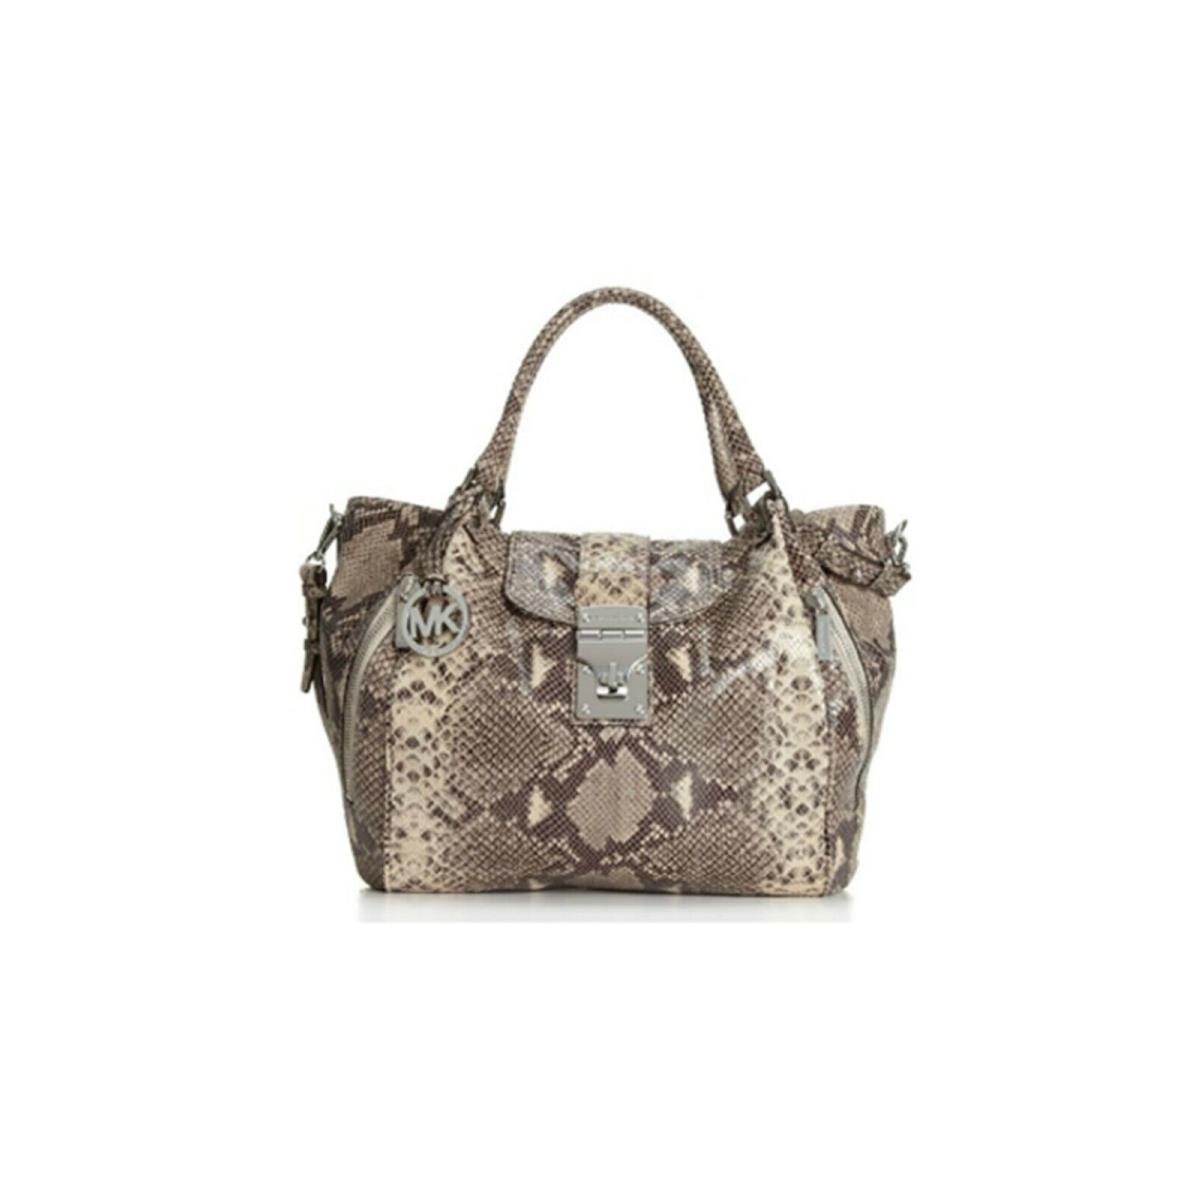 Michael Kors - MK Jenna Large Tote - Dark Sand - Animal Print Leather Handbag